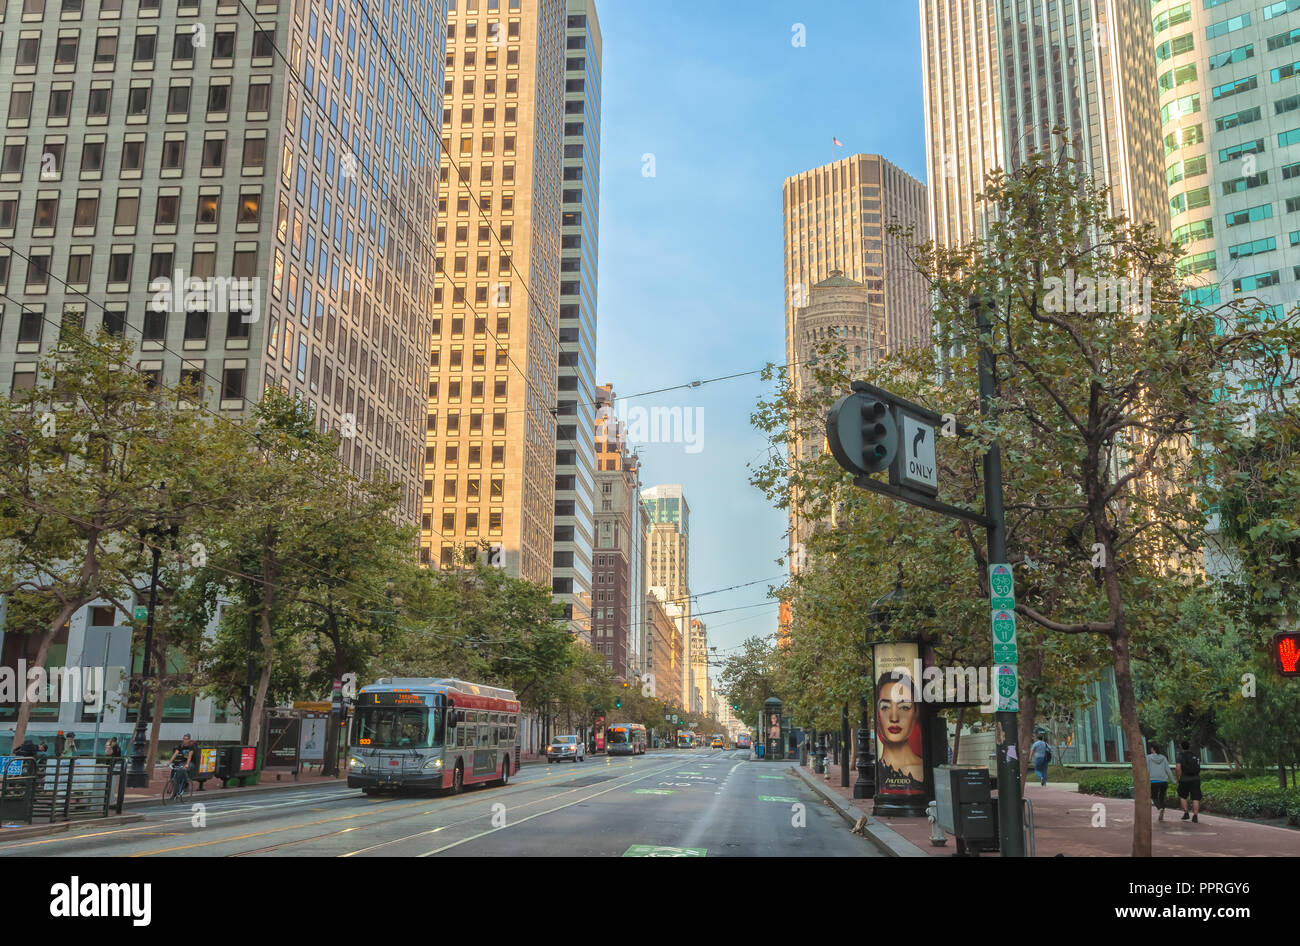 Muni Bus On Market Street In San Francisco California United States On An Early Sunday Morning Stock Photo Alamy